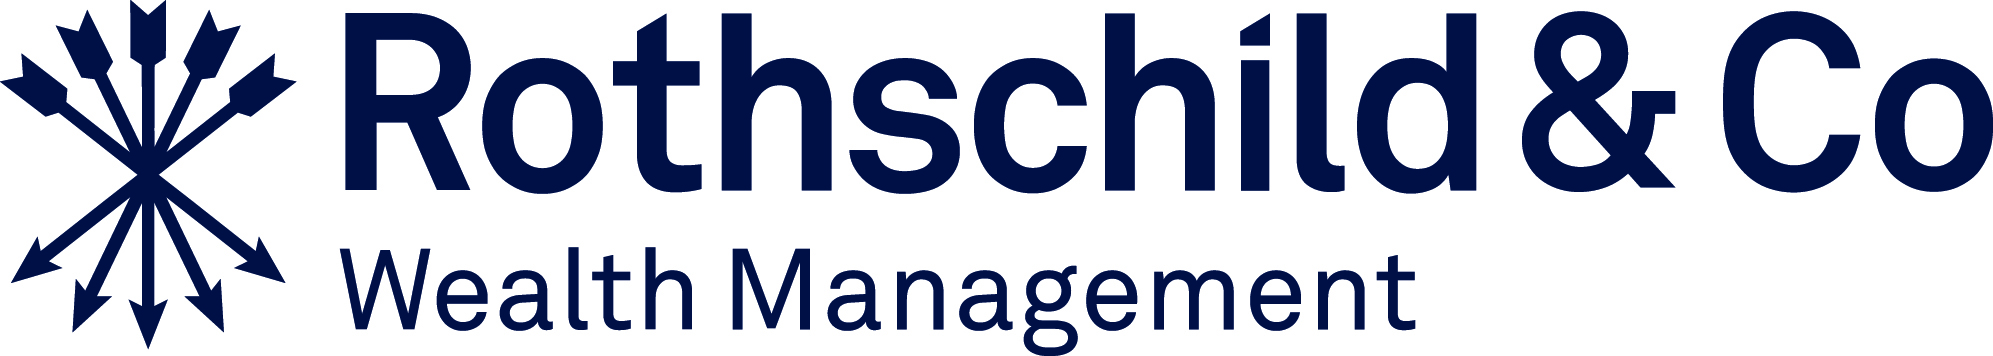 Rothschild & Co Wealth Management UK Limited logo